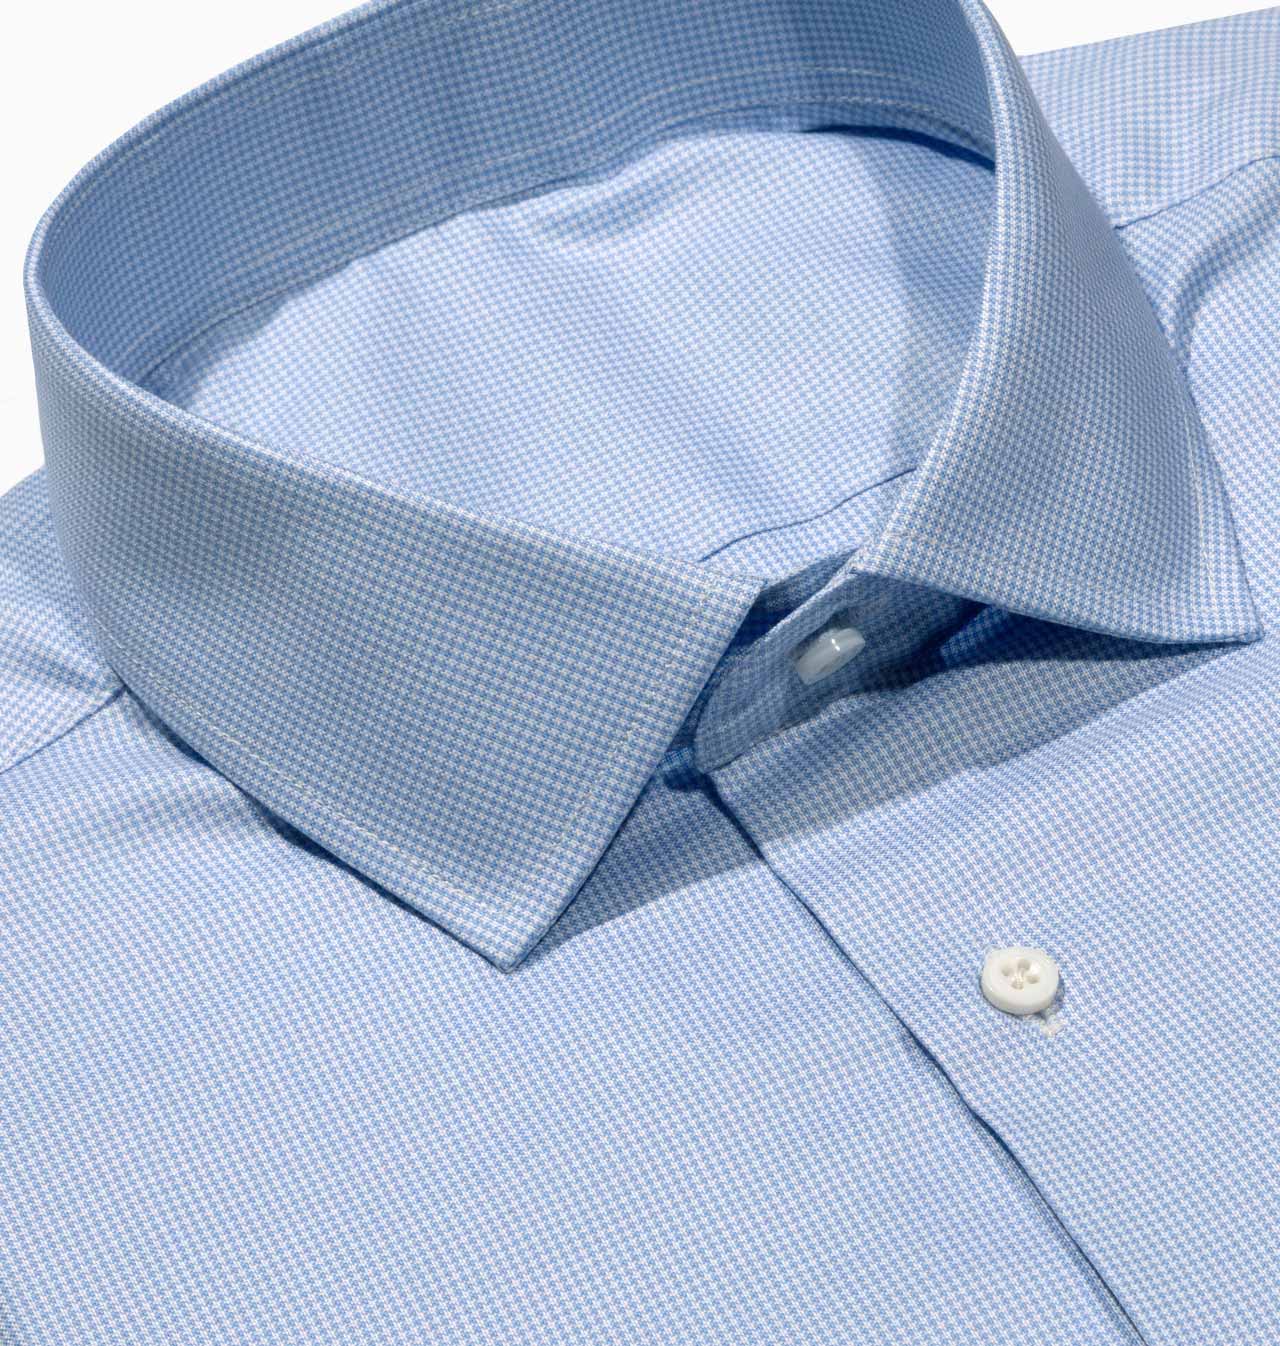 Men’s Tailored Blue Crossed Oxford Dress Shirt